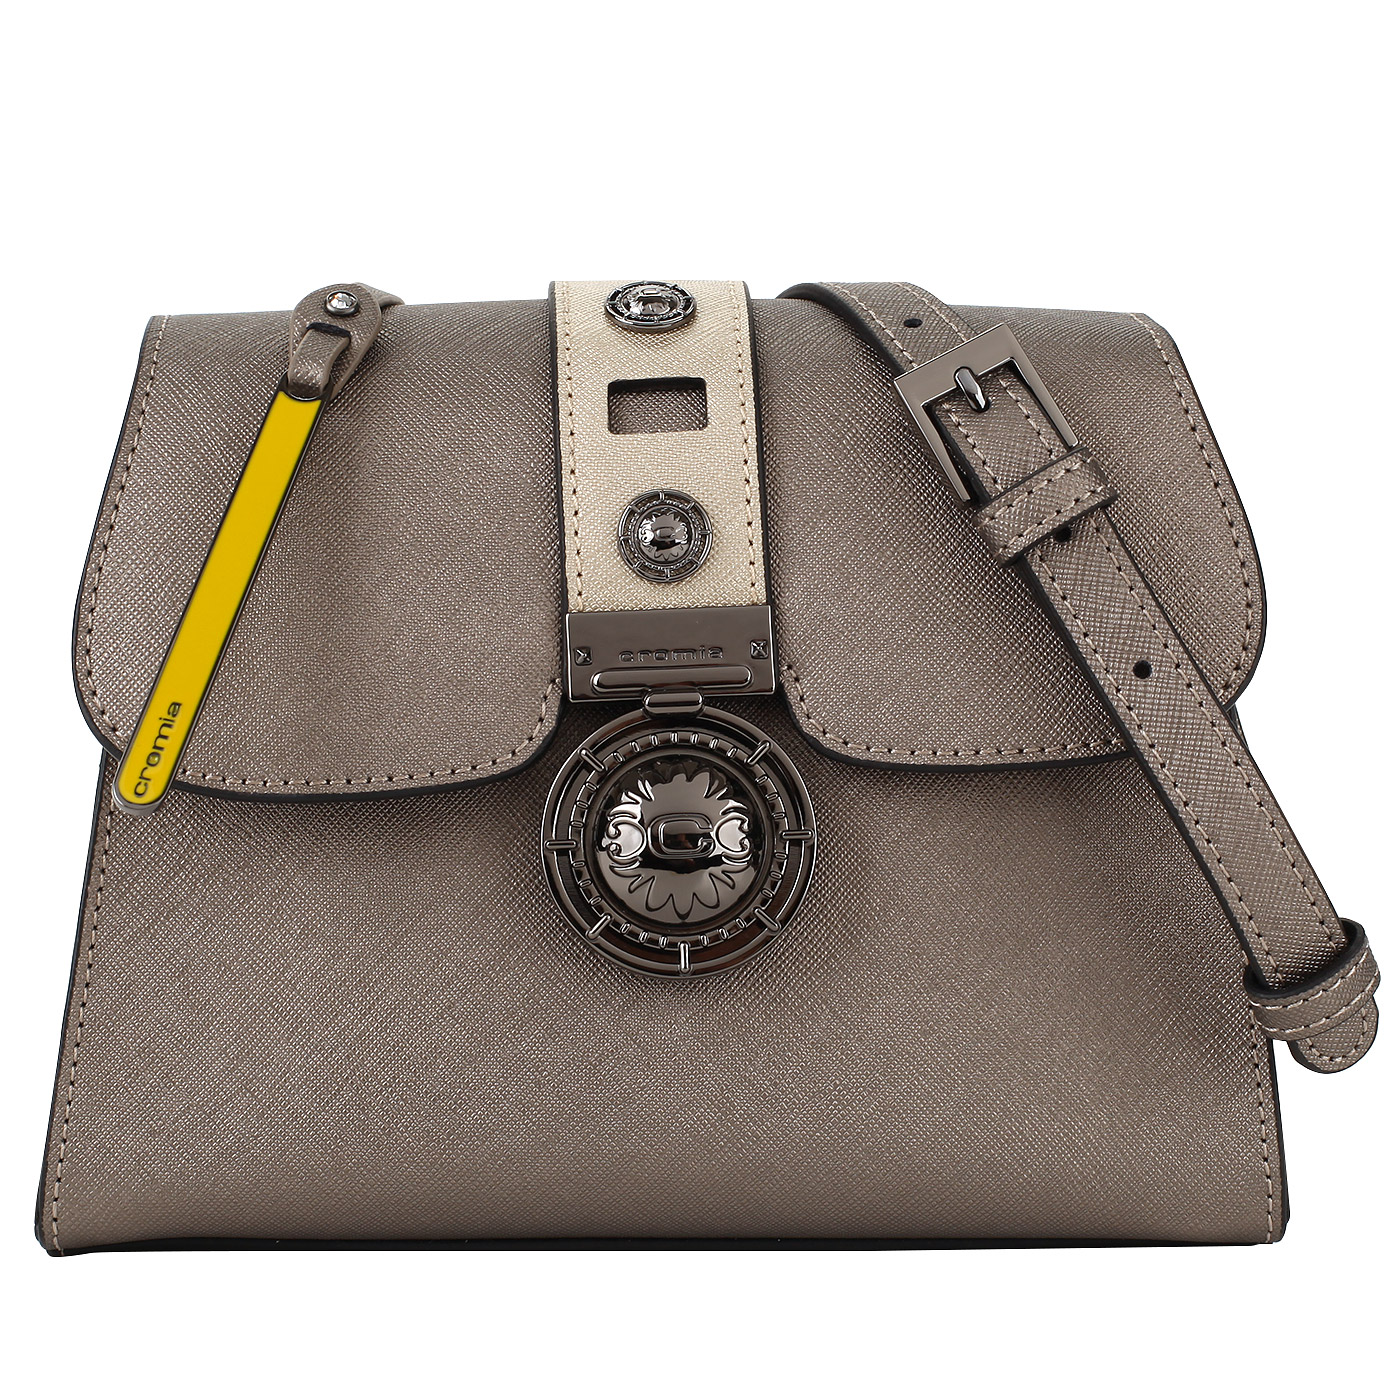 Cromia Сафьяновая сумочка со съемным ремешком